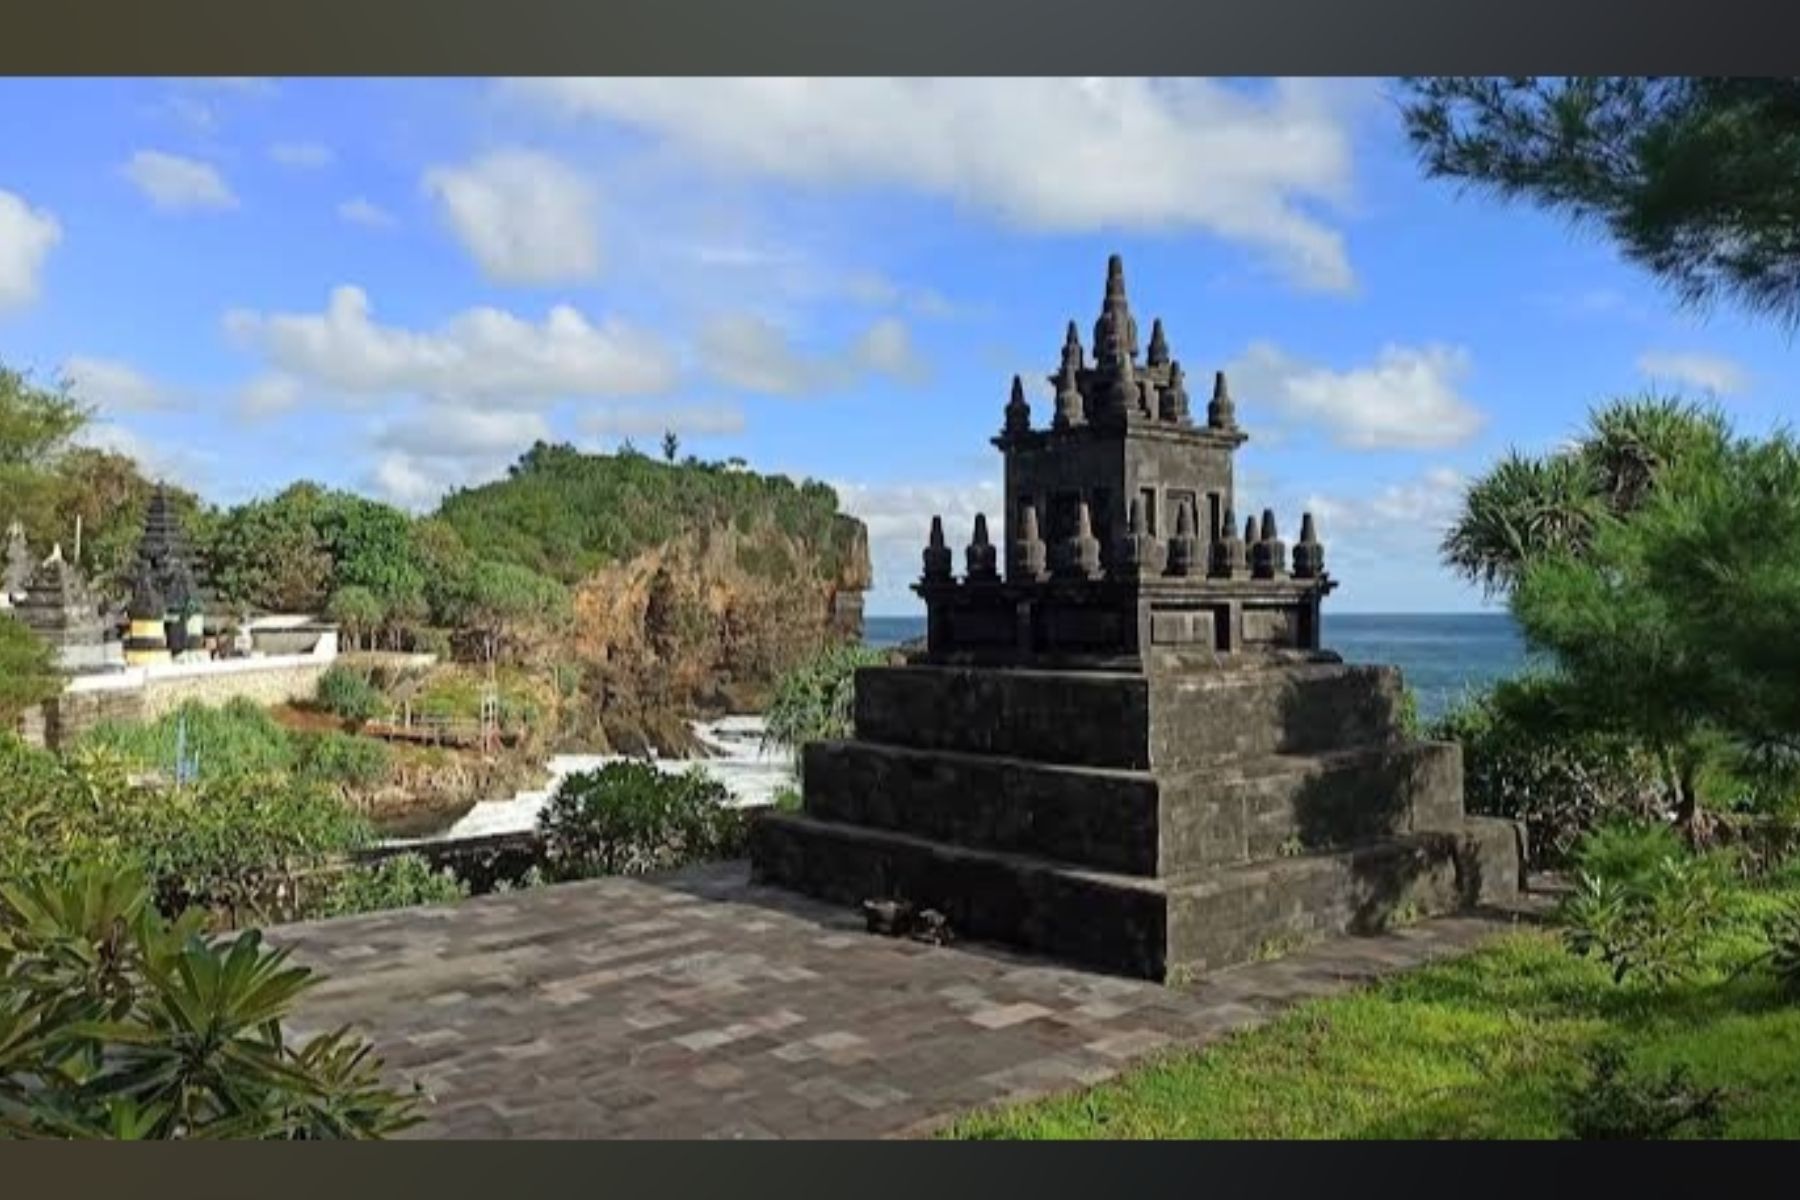 Mulai dari Pura Hingga Masjid, Nikmati Pantai Gunungkidul Nuansa Bali dengan Empat Tempat Ibadah Berdekatan